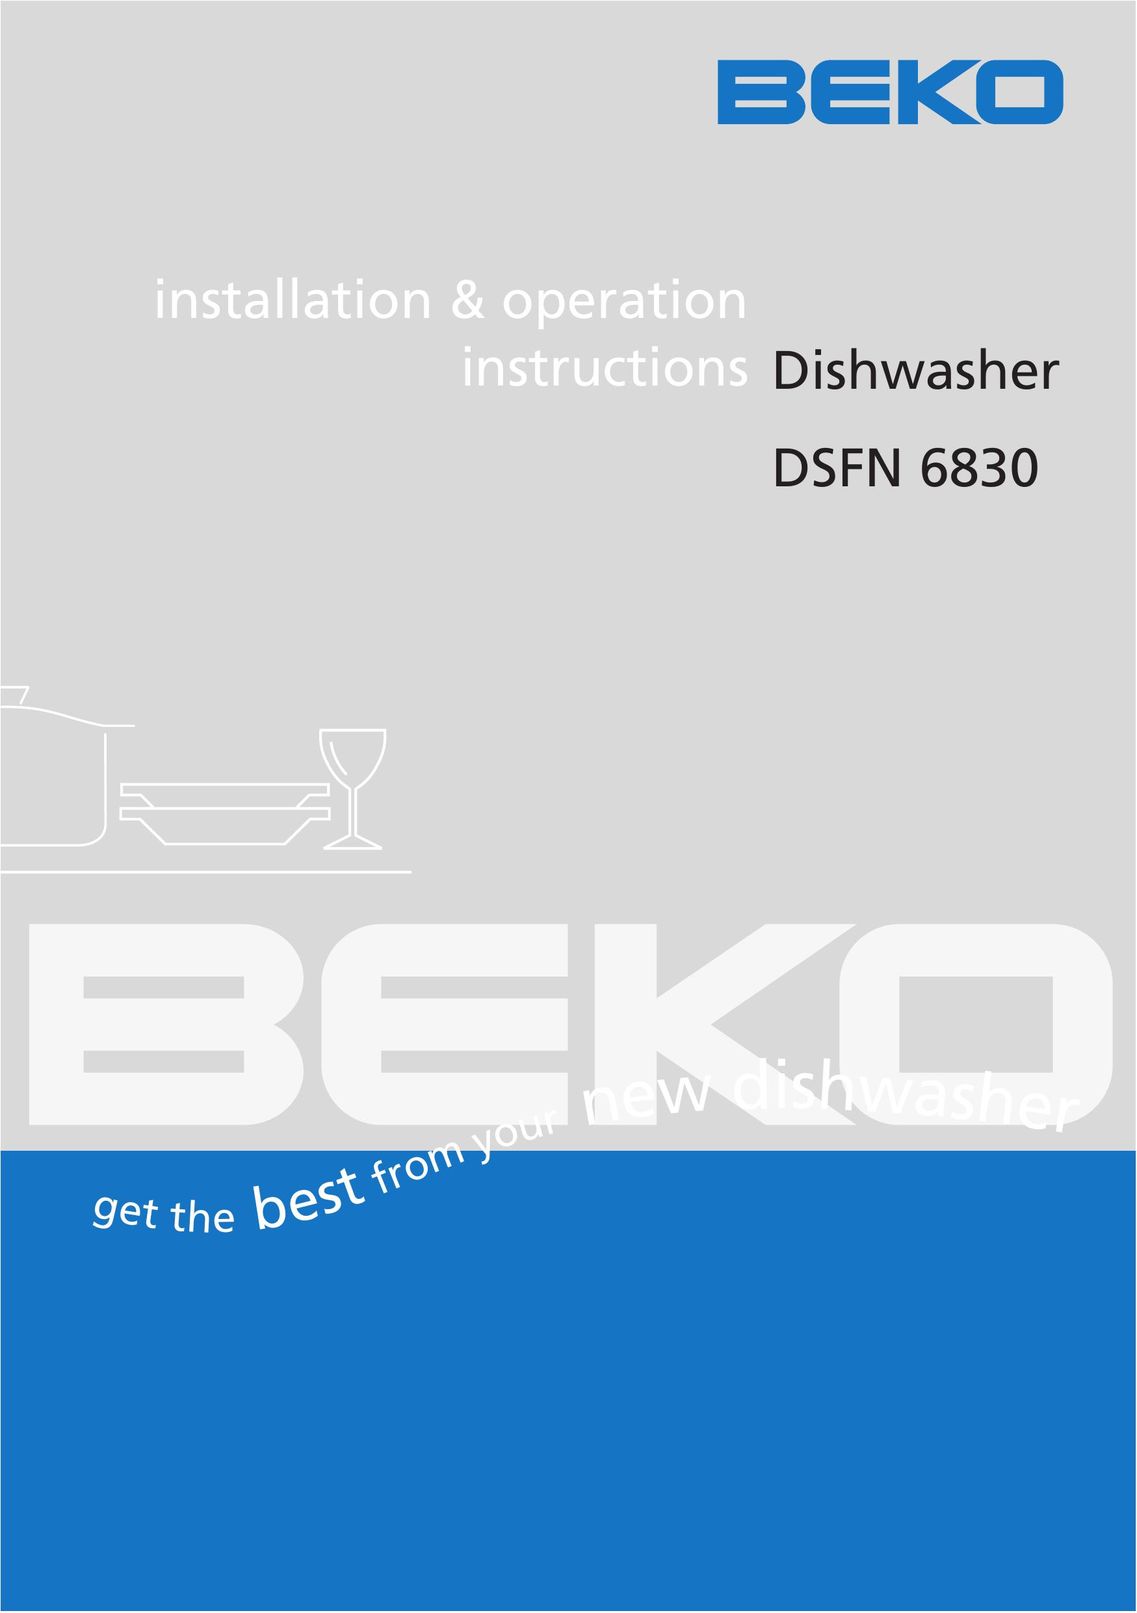 Beko DSFN 6830 Dishwasher User Manual